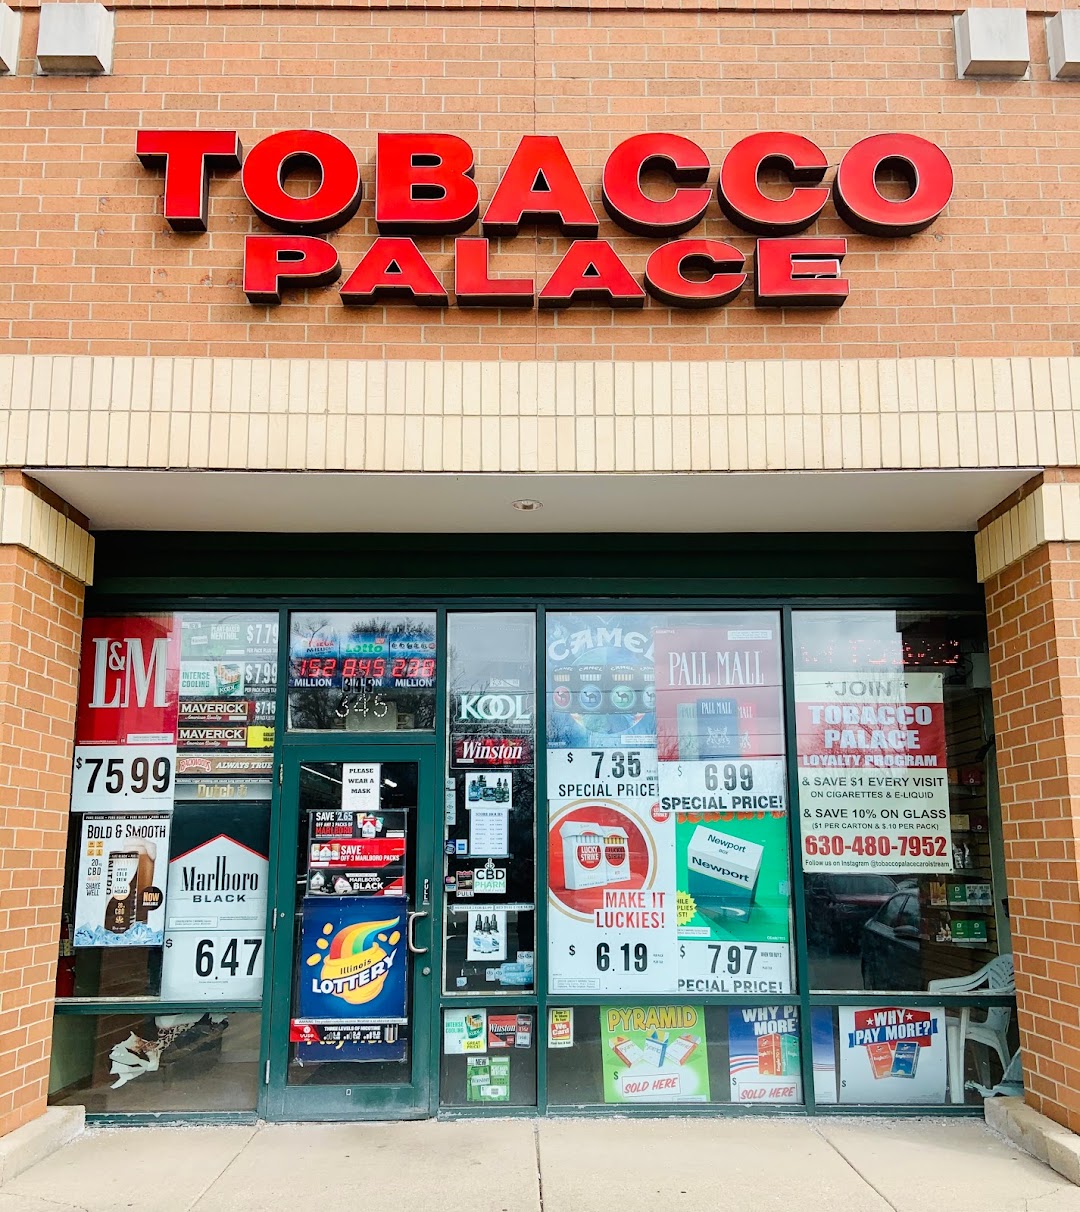 Tobacco Palace